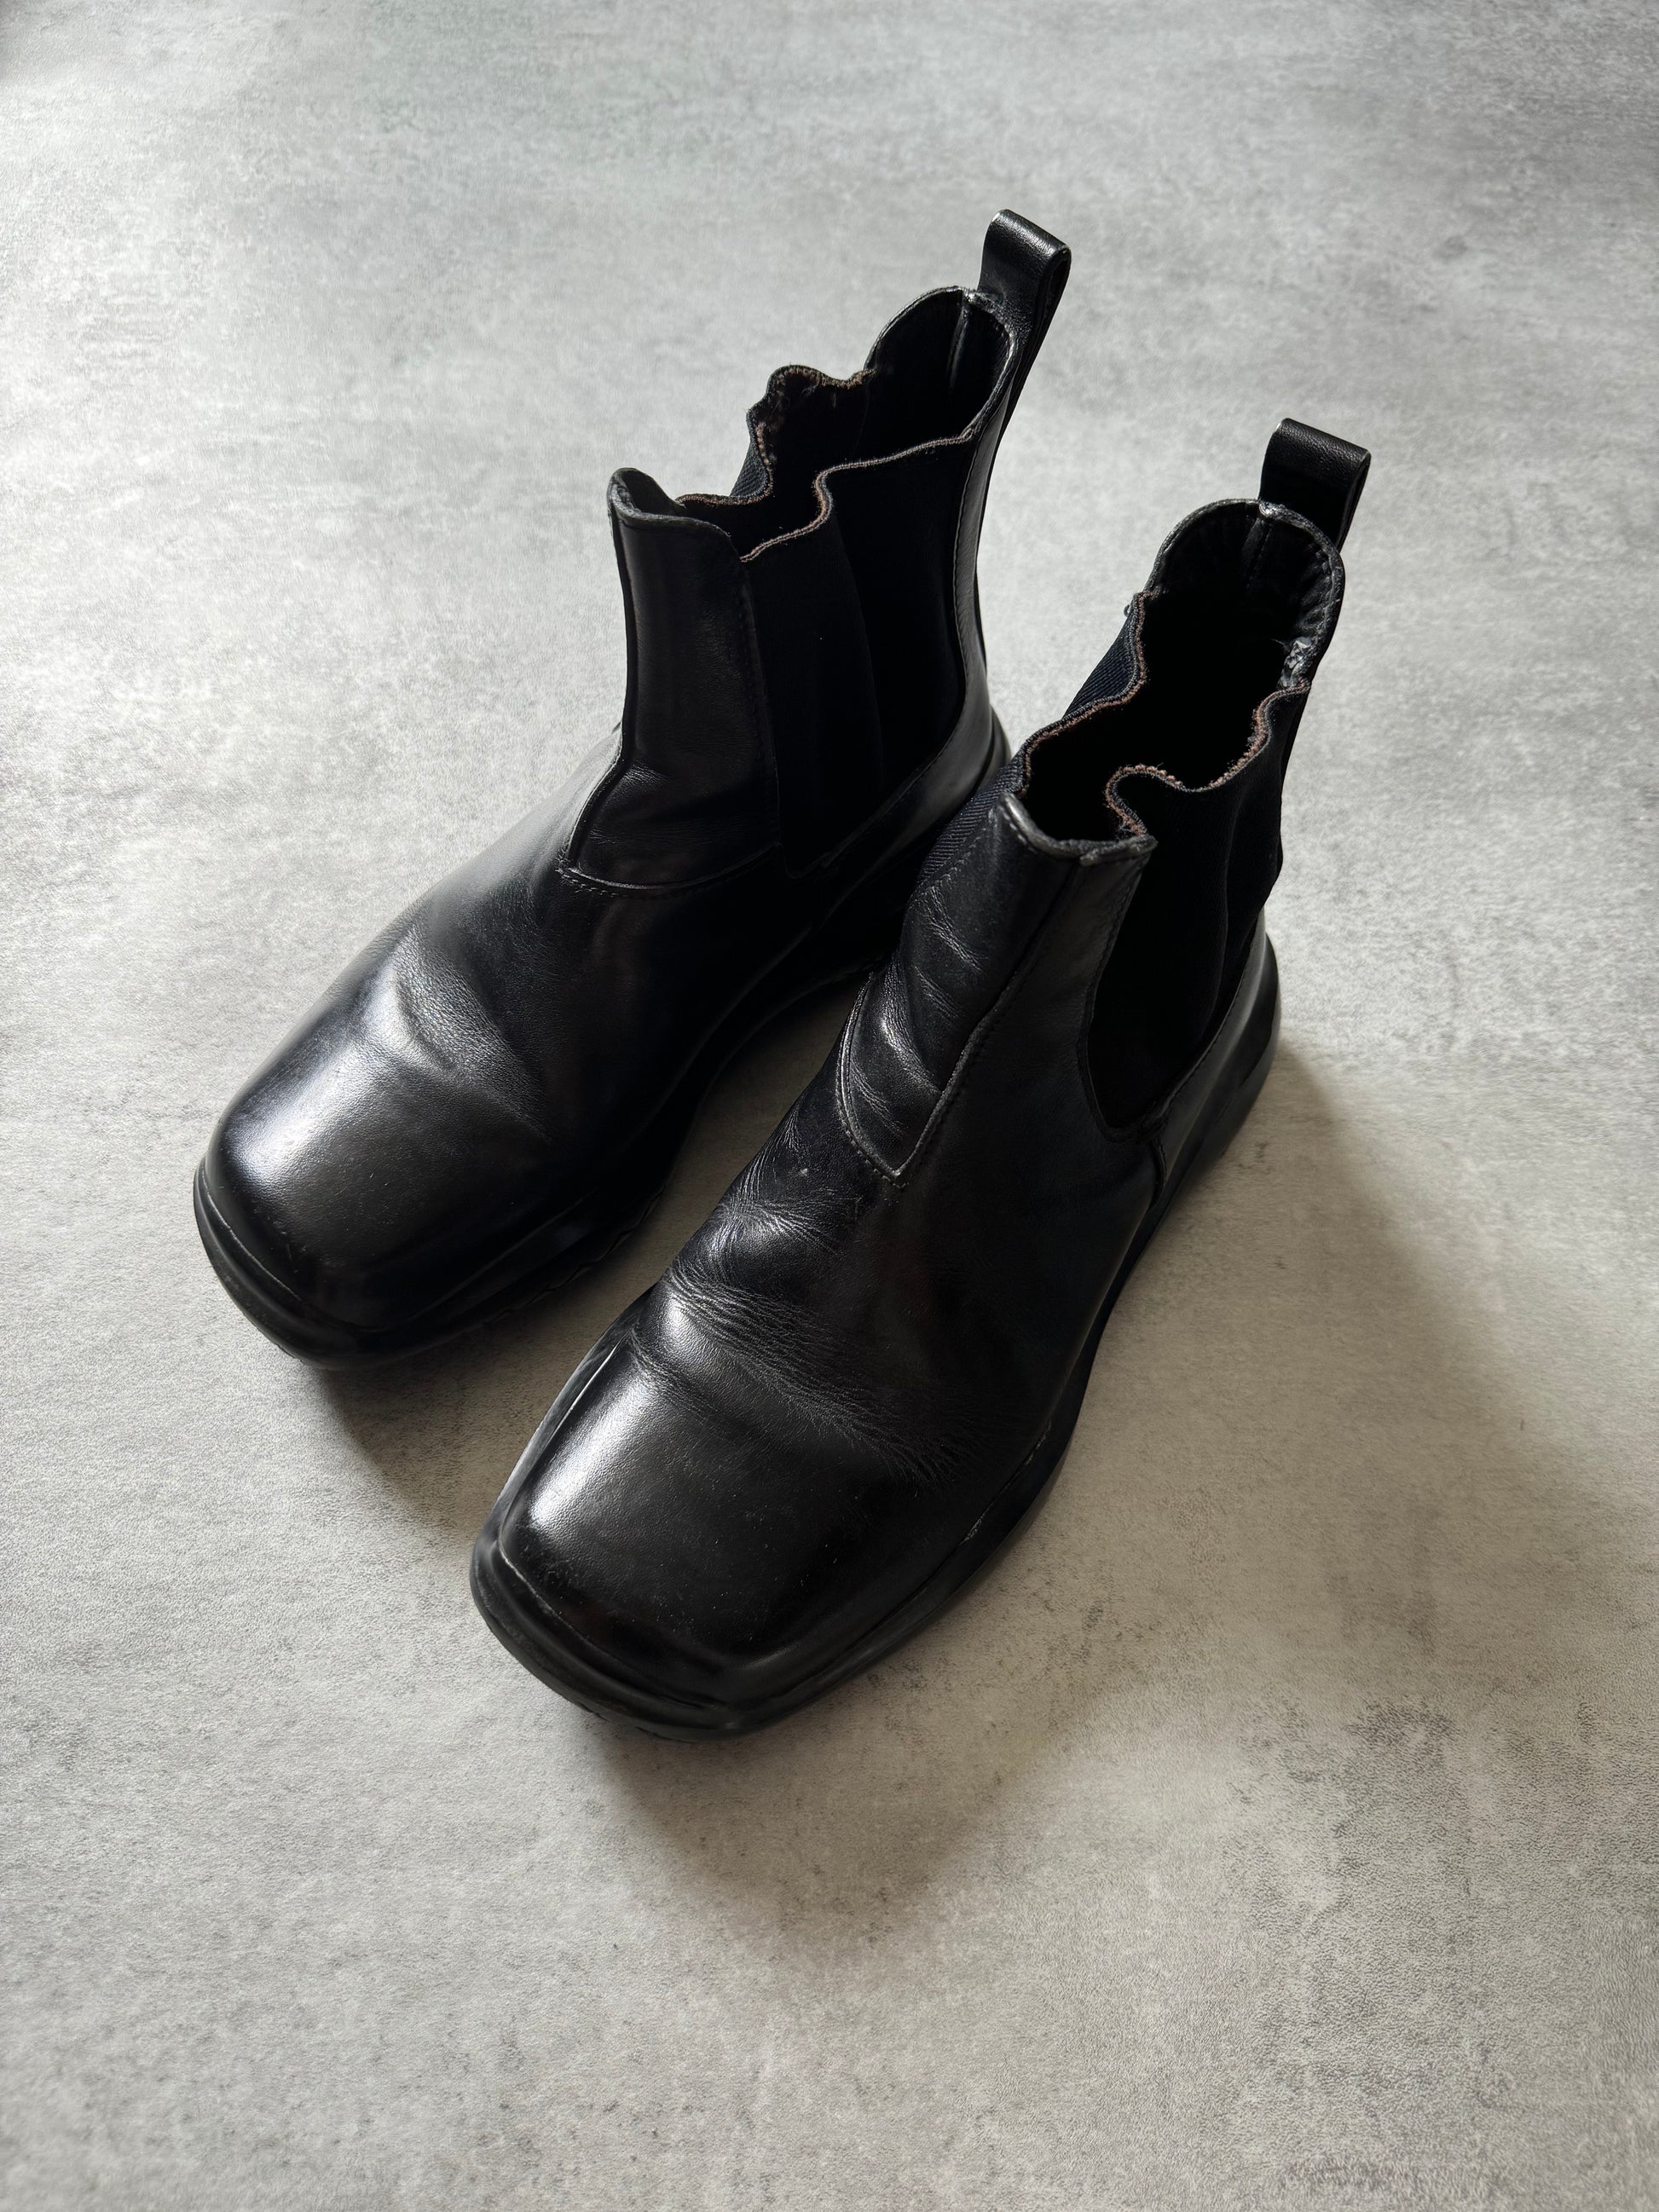 FW1999 Prada Black Leather Boots (40) - 3